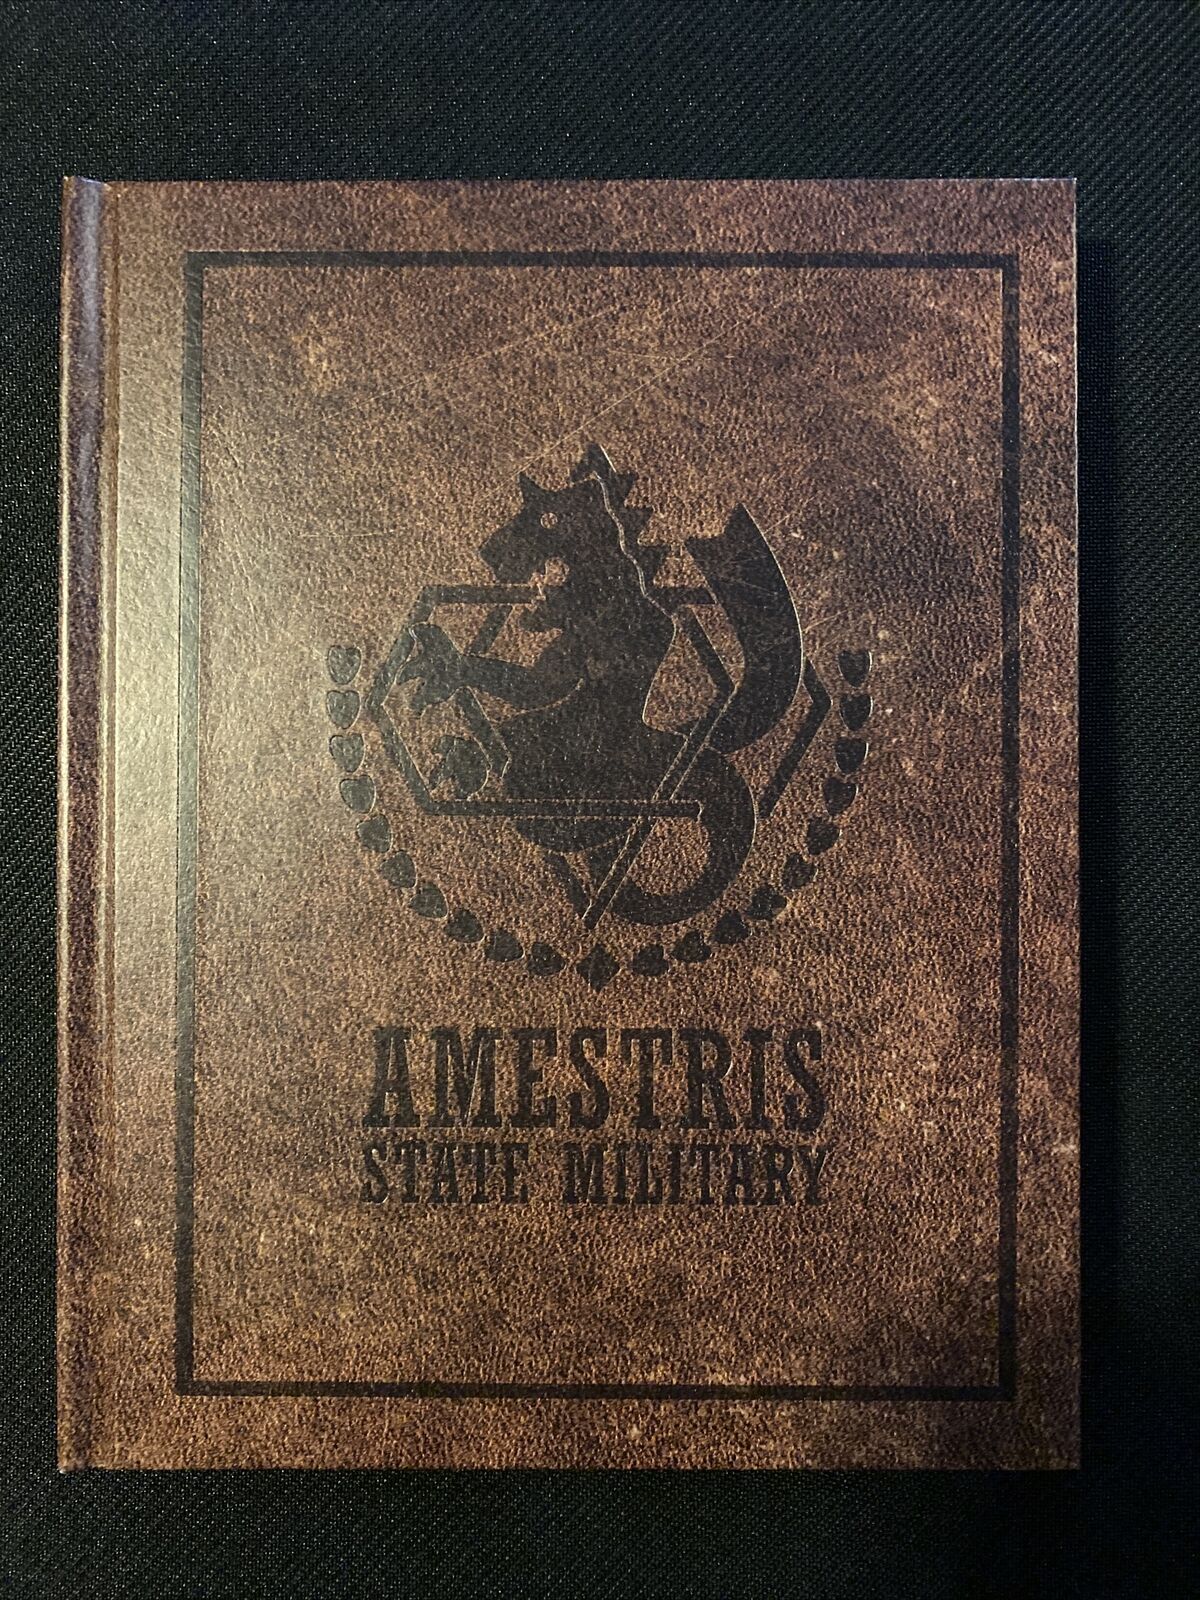 fullmetal alchemist The Complete Series Collectors Edition Art book & Art Cards